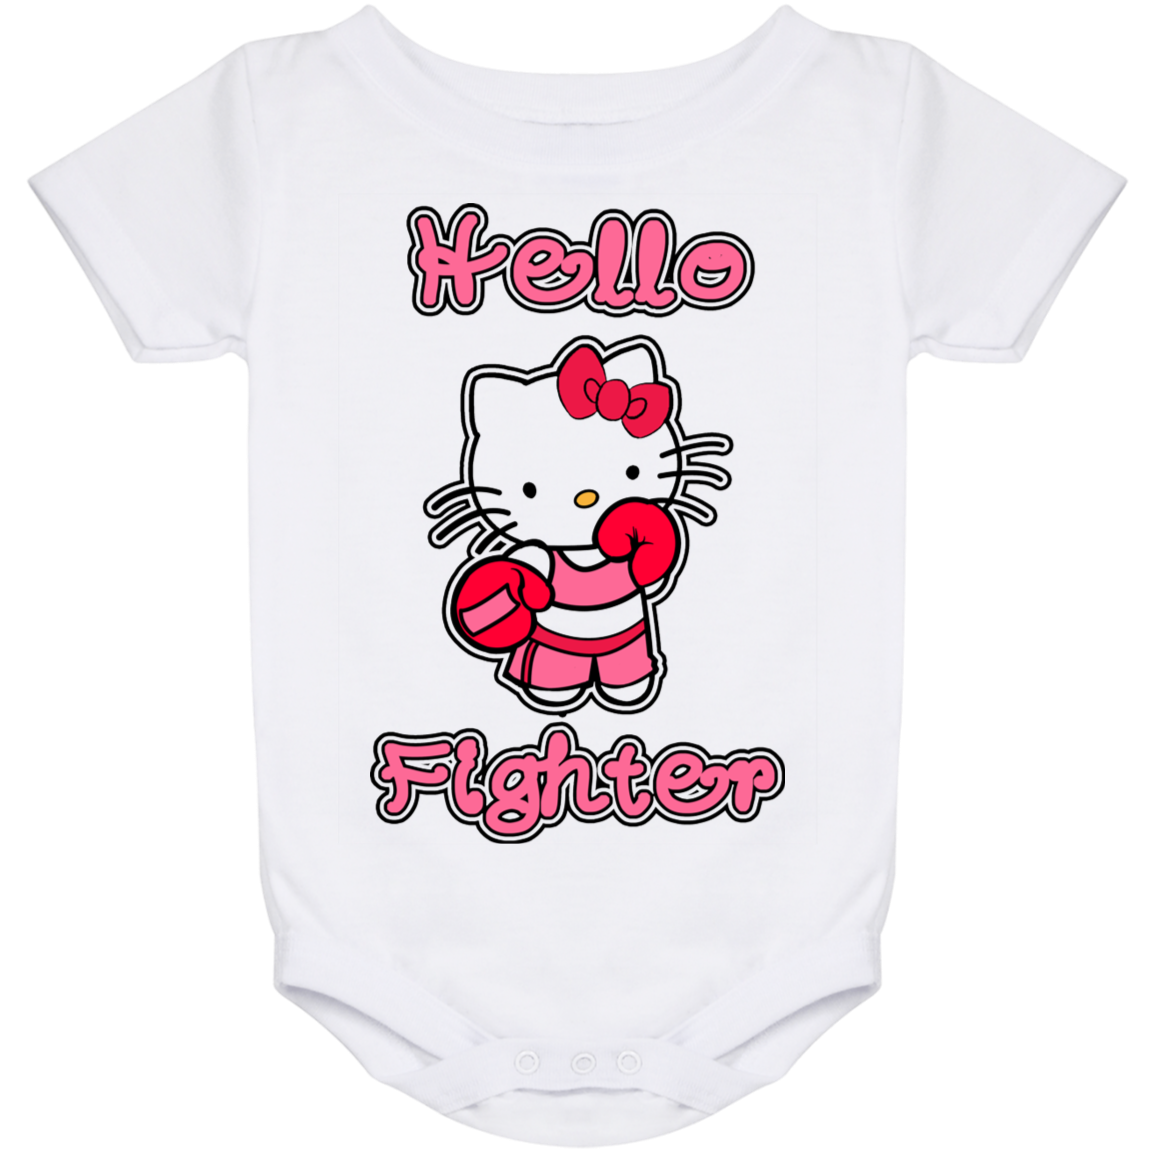 Artichoke Fight Gear Custom Design #11. Hello Fighter. Baby Onesie 24 Month